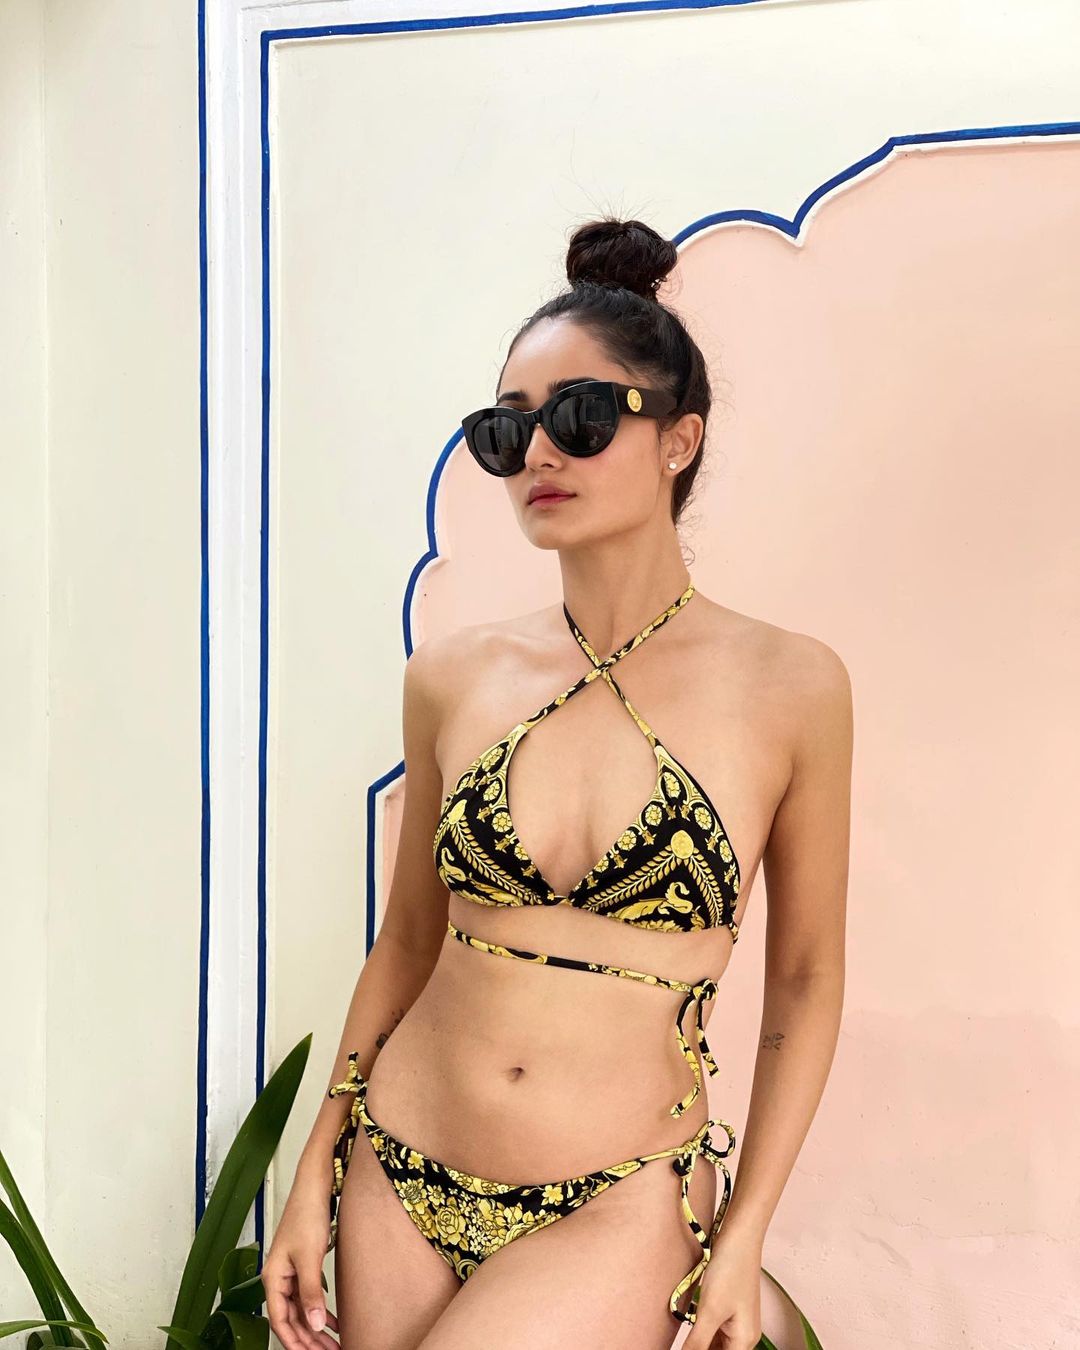 Tridha Choudhury displays her toned body in the printed bikini